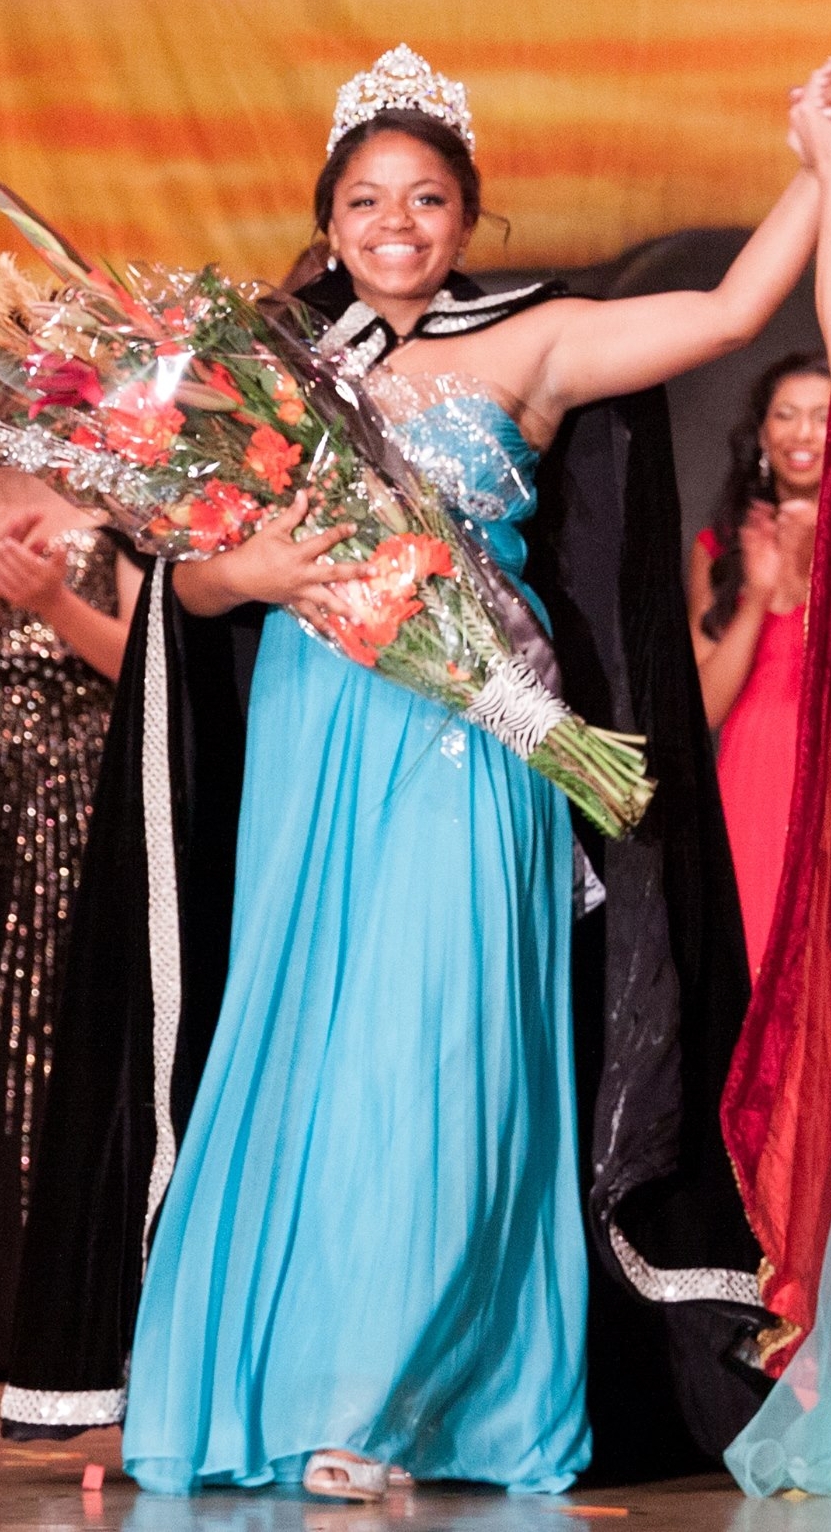 Madison Coleman, Miss Teen Vista 2014